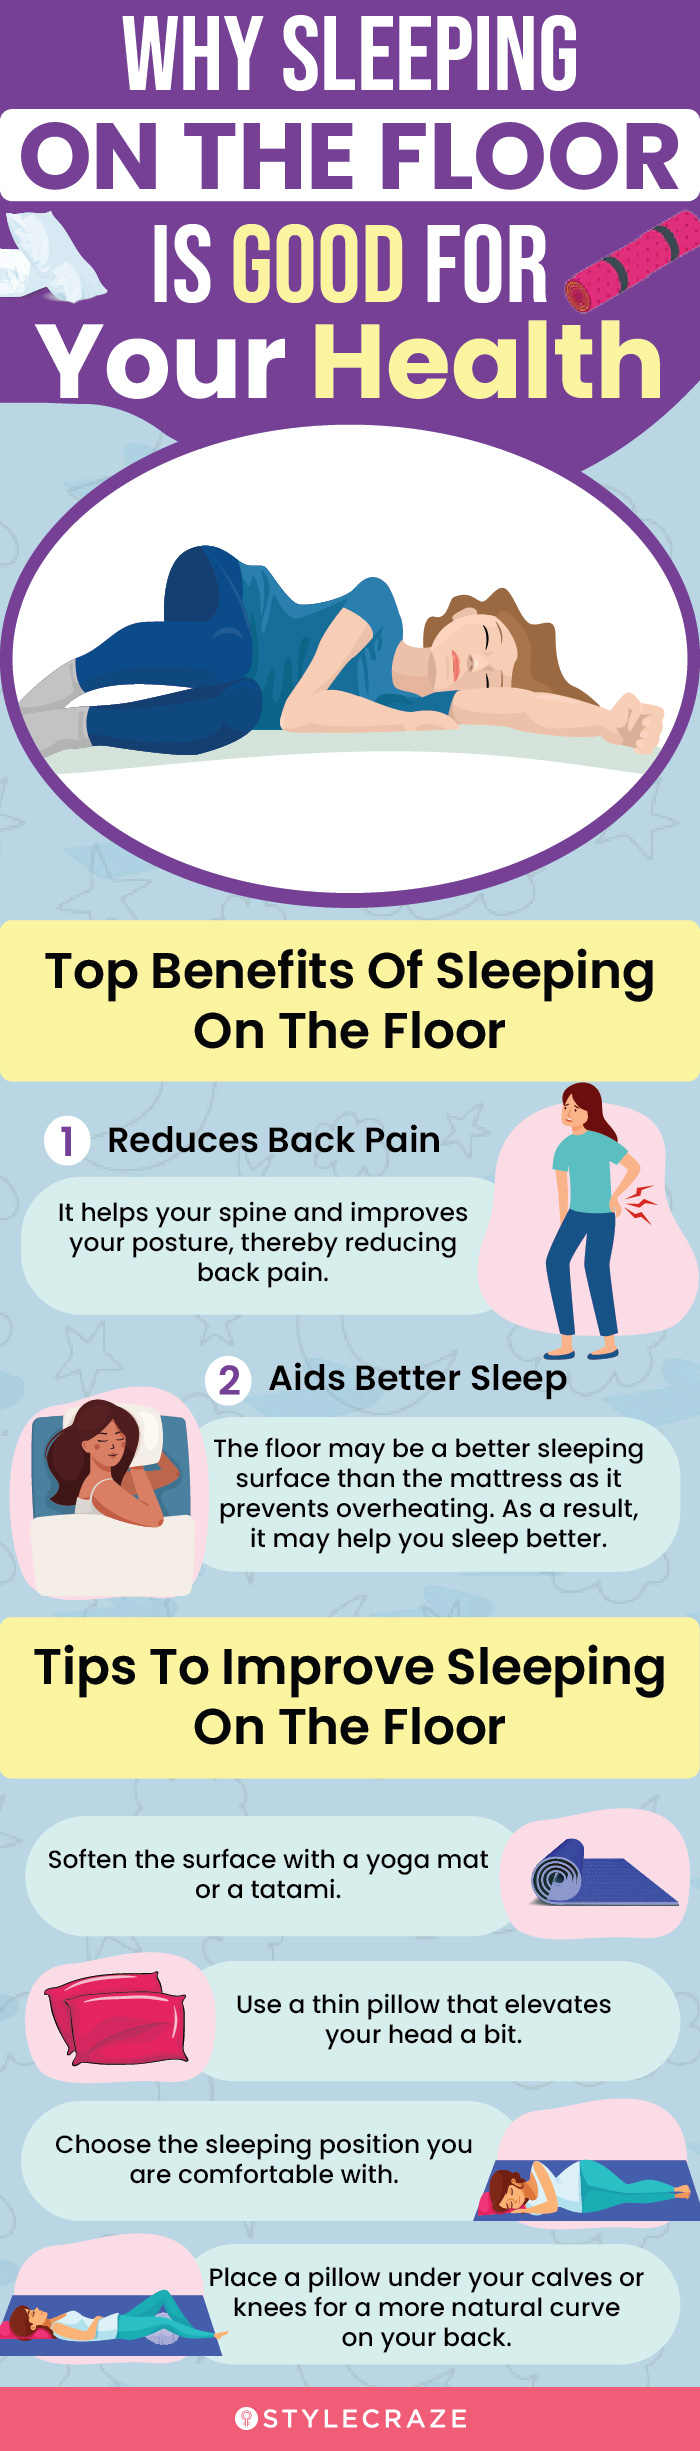 https://cdn2.stylecraze.com/wp-content/uploads/2018/10/Why-Sleeping-On-The-Floor-Is-Good-For-Your-Health.jpg